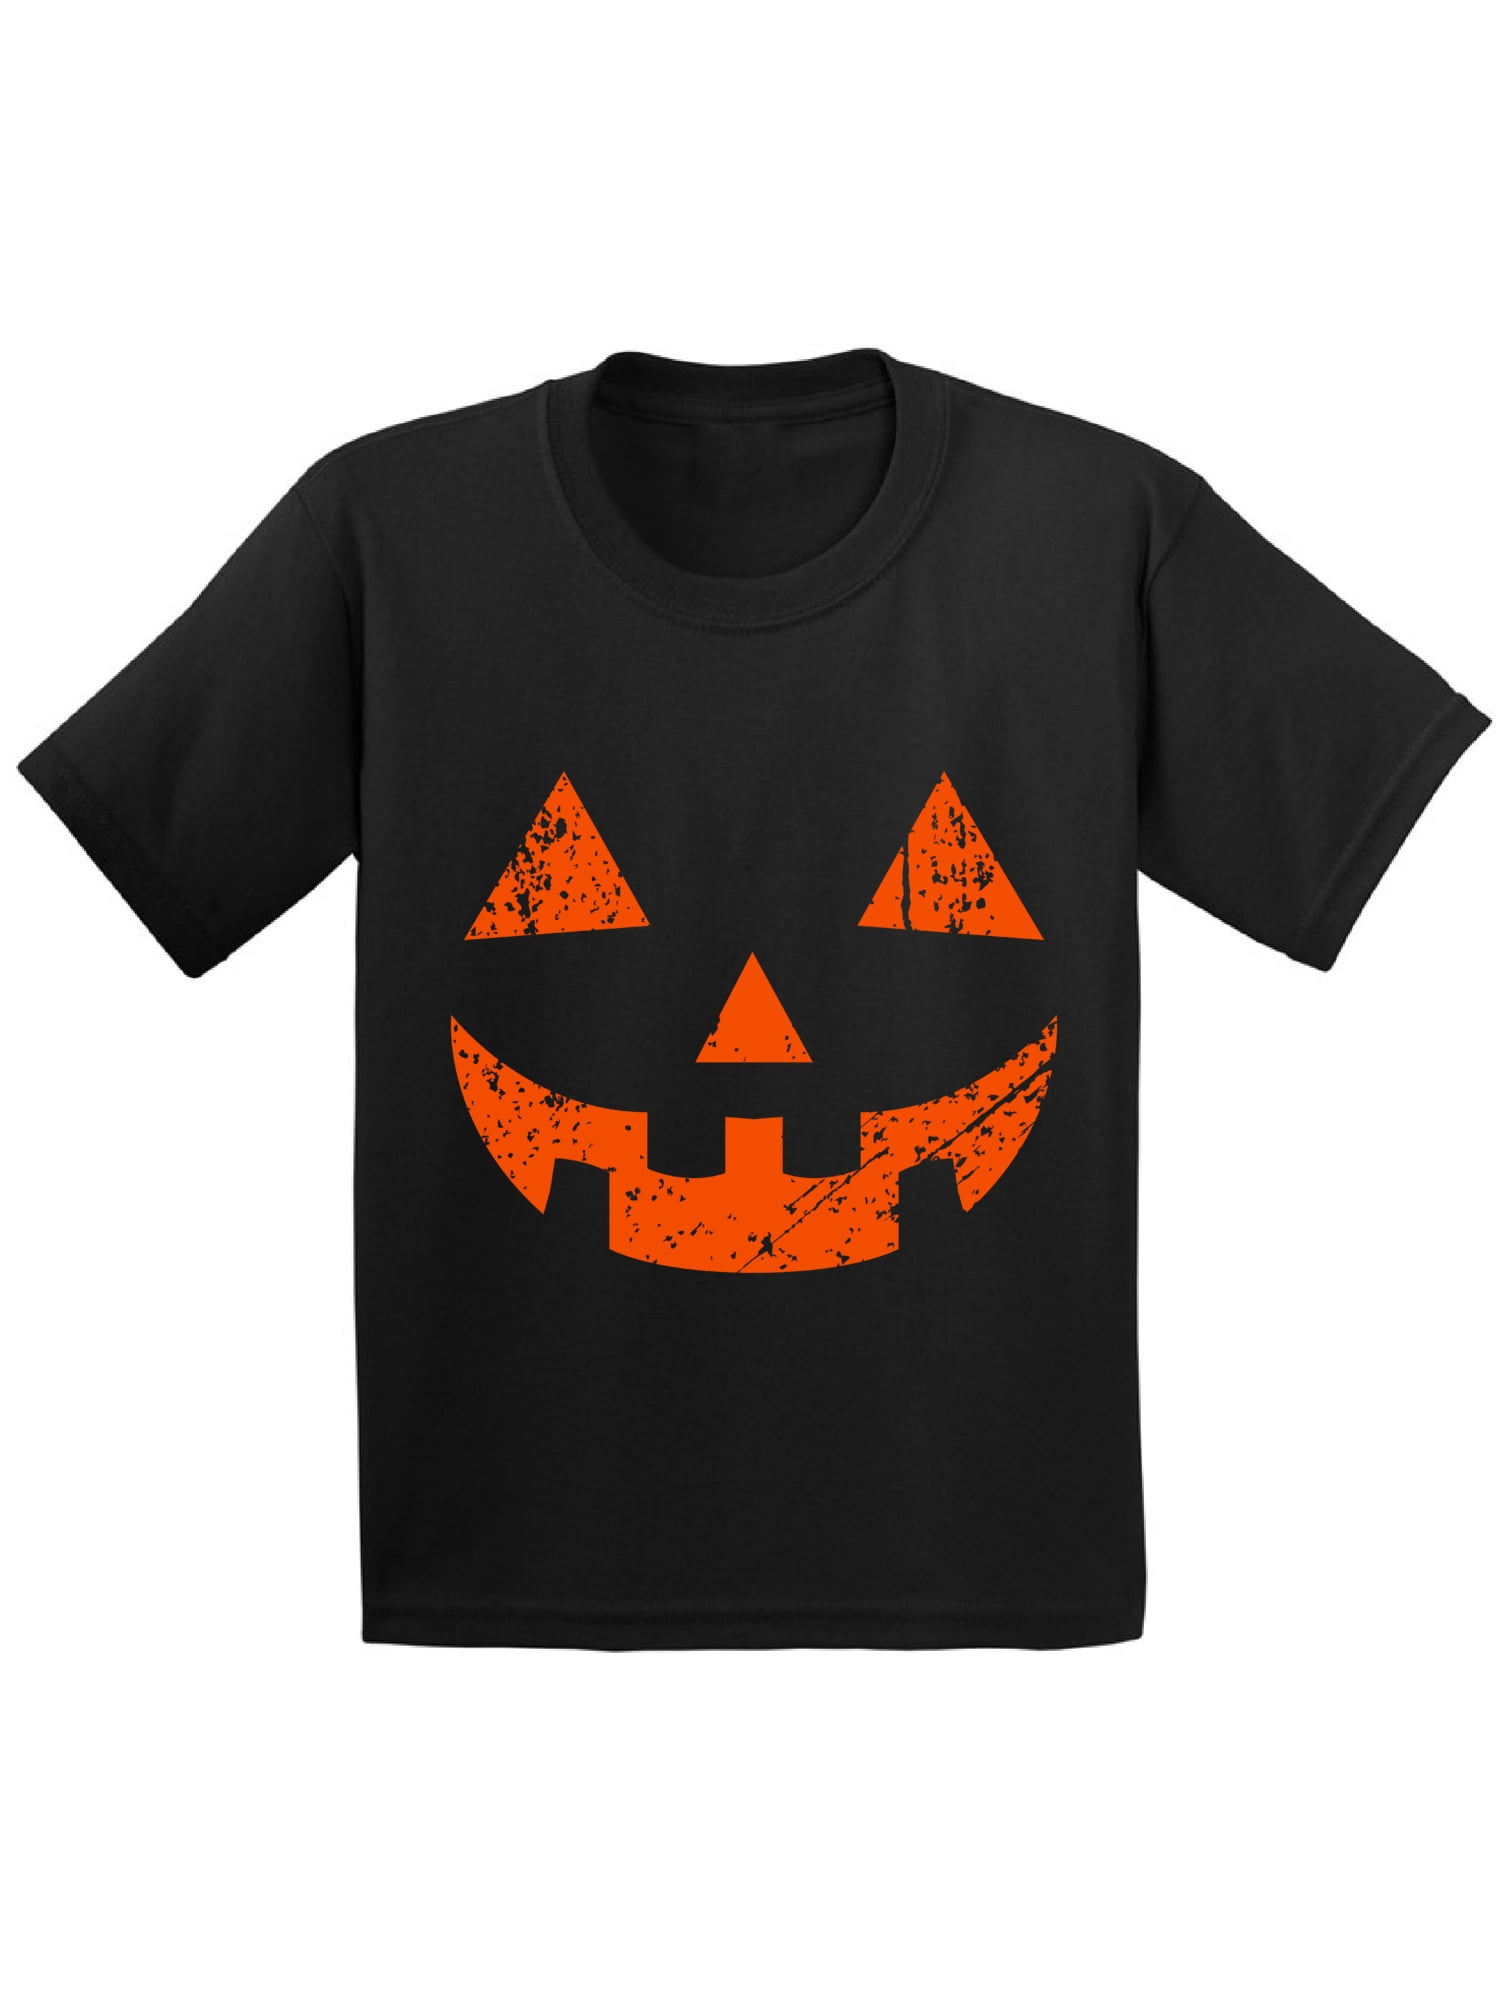 Unisex Youth Short Sleeve Emoticon Smile Face Summer Kid Shirt Kids's Sunglasses Emoticon T Shirt Halloween Costume Childrens Tshirt